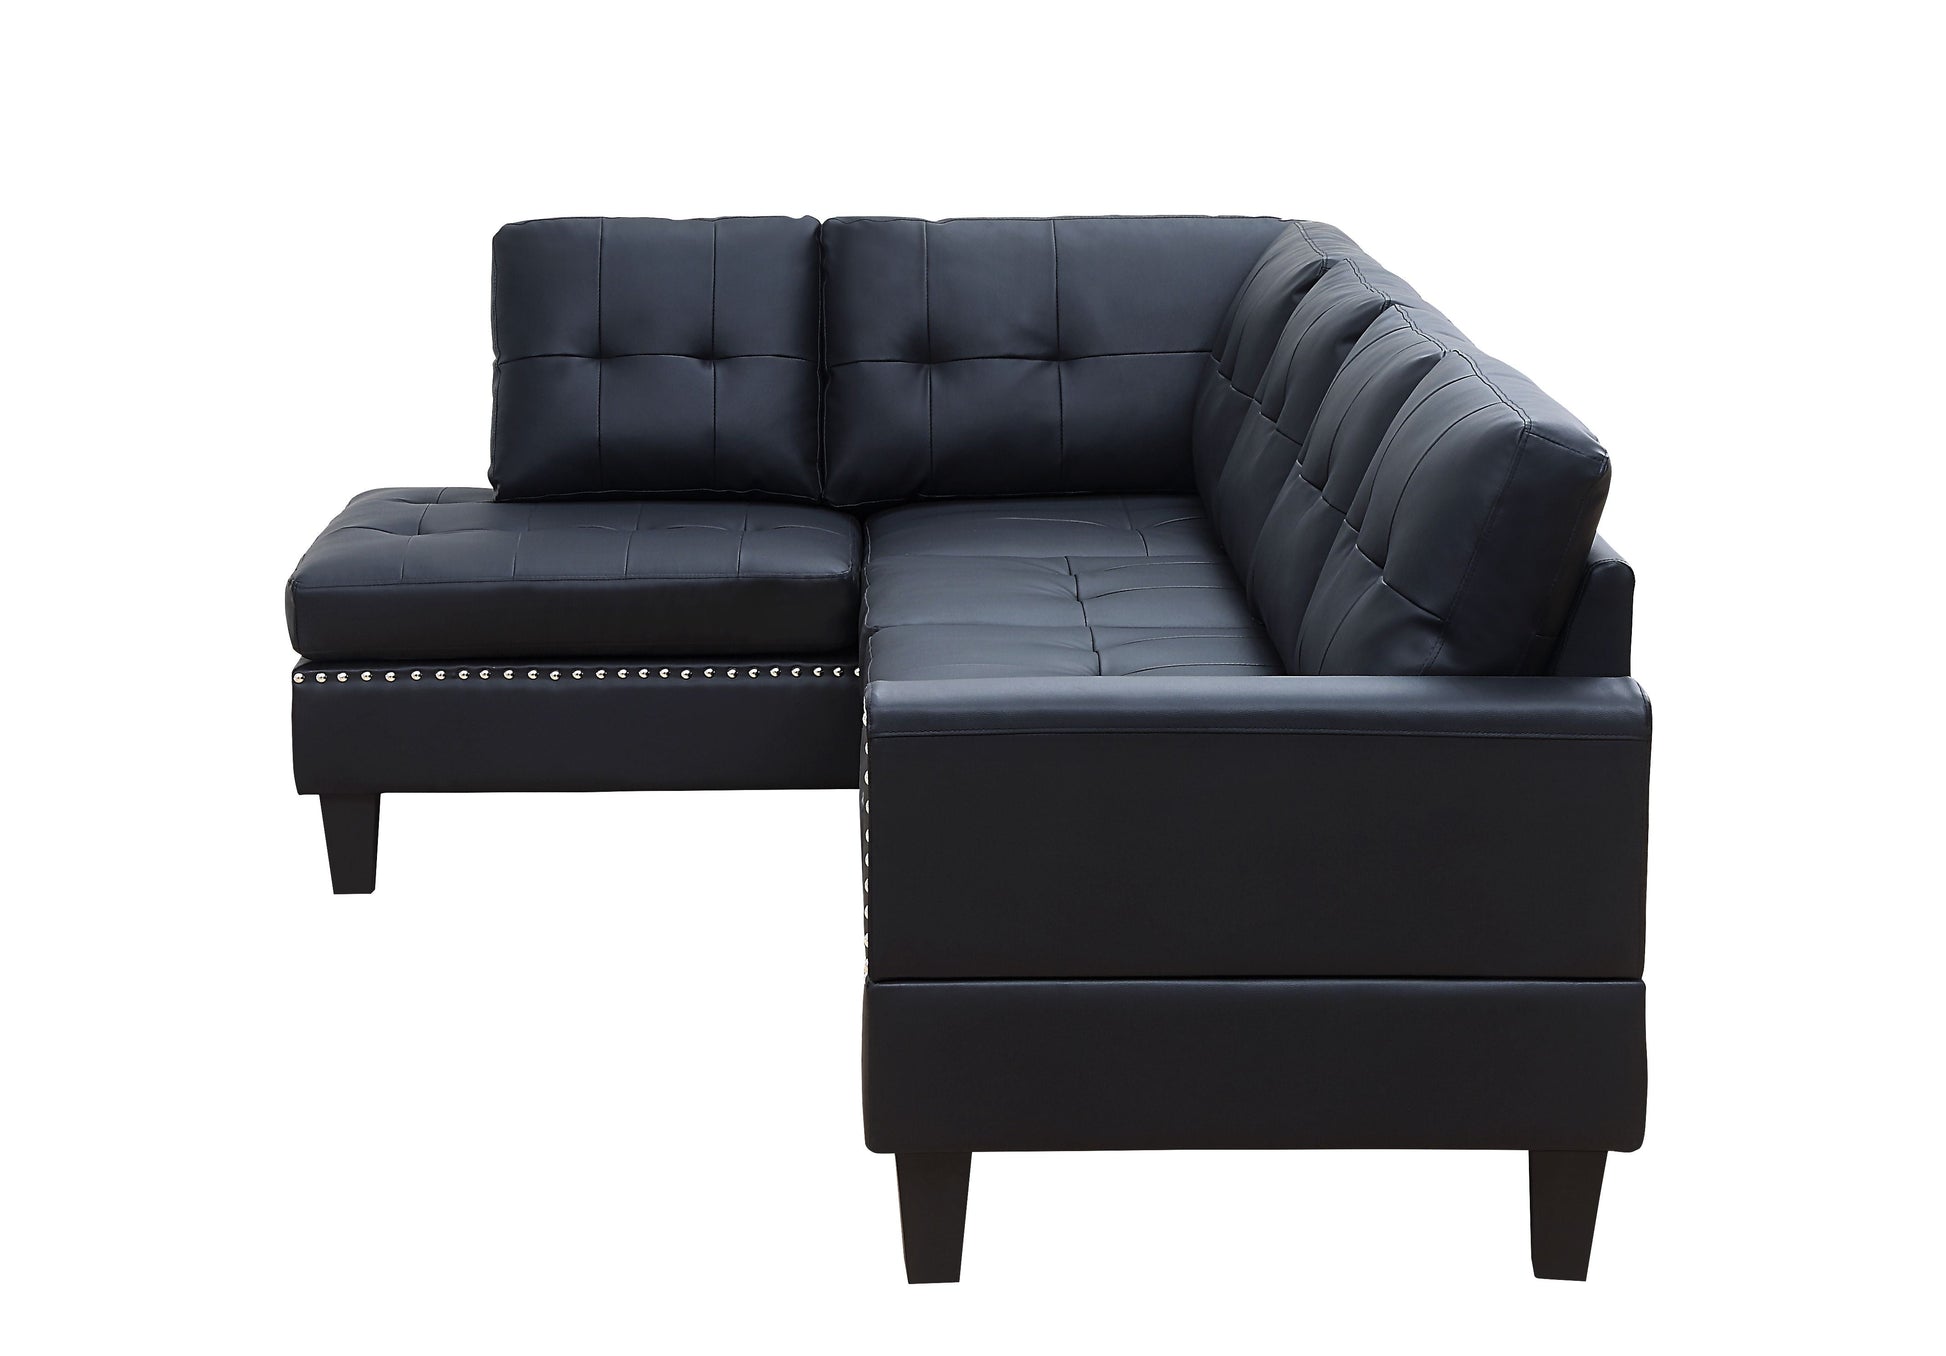 Jeimmur Sectional Sofa Black - Demine Essentials